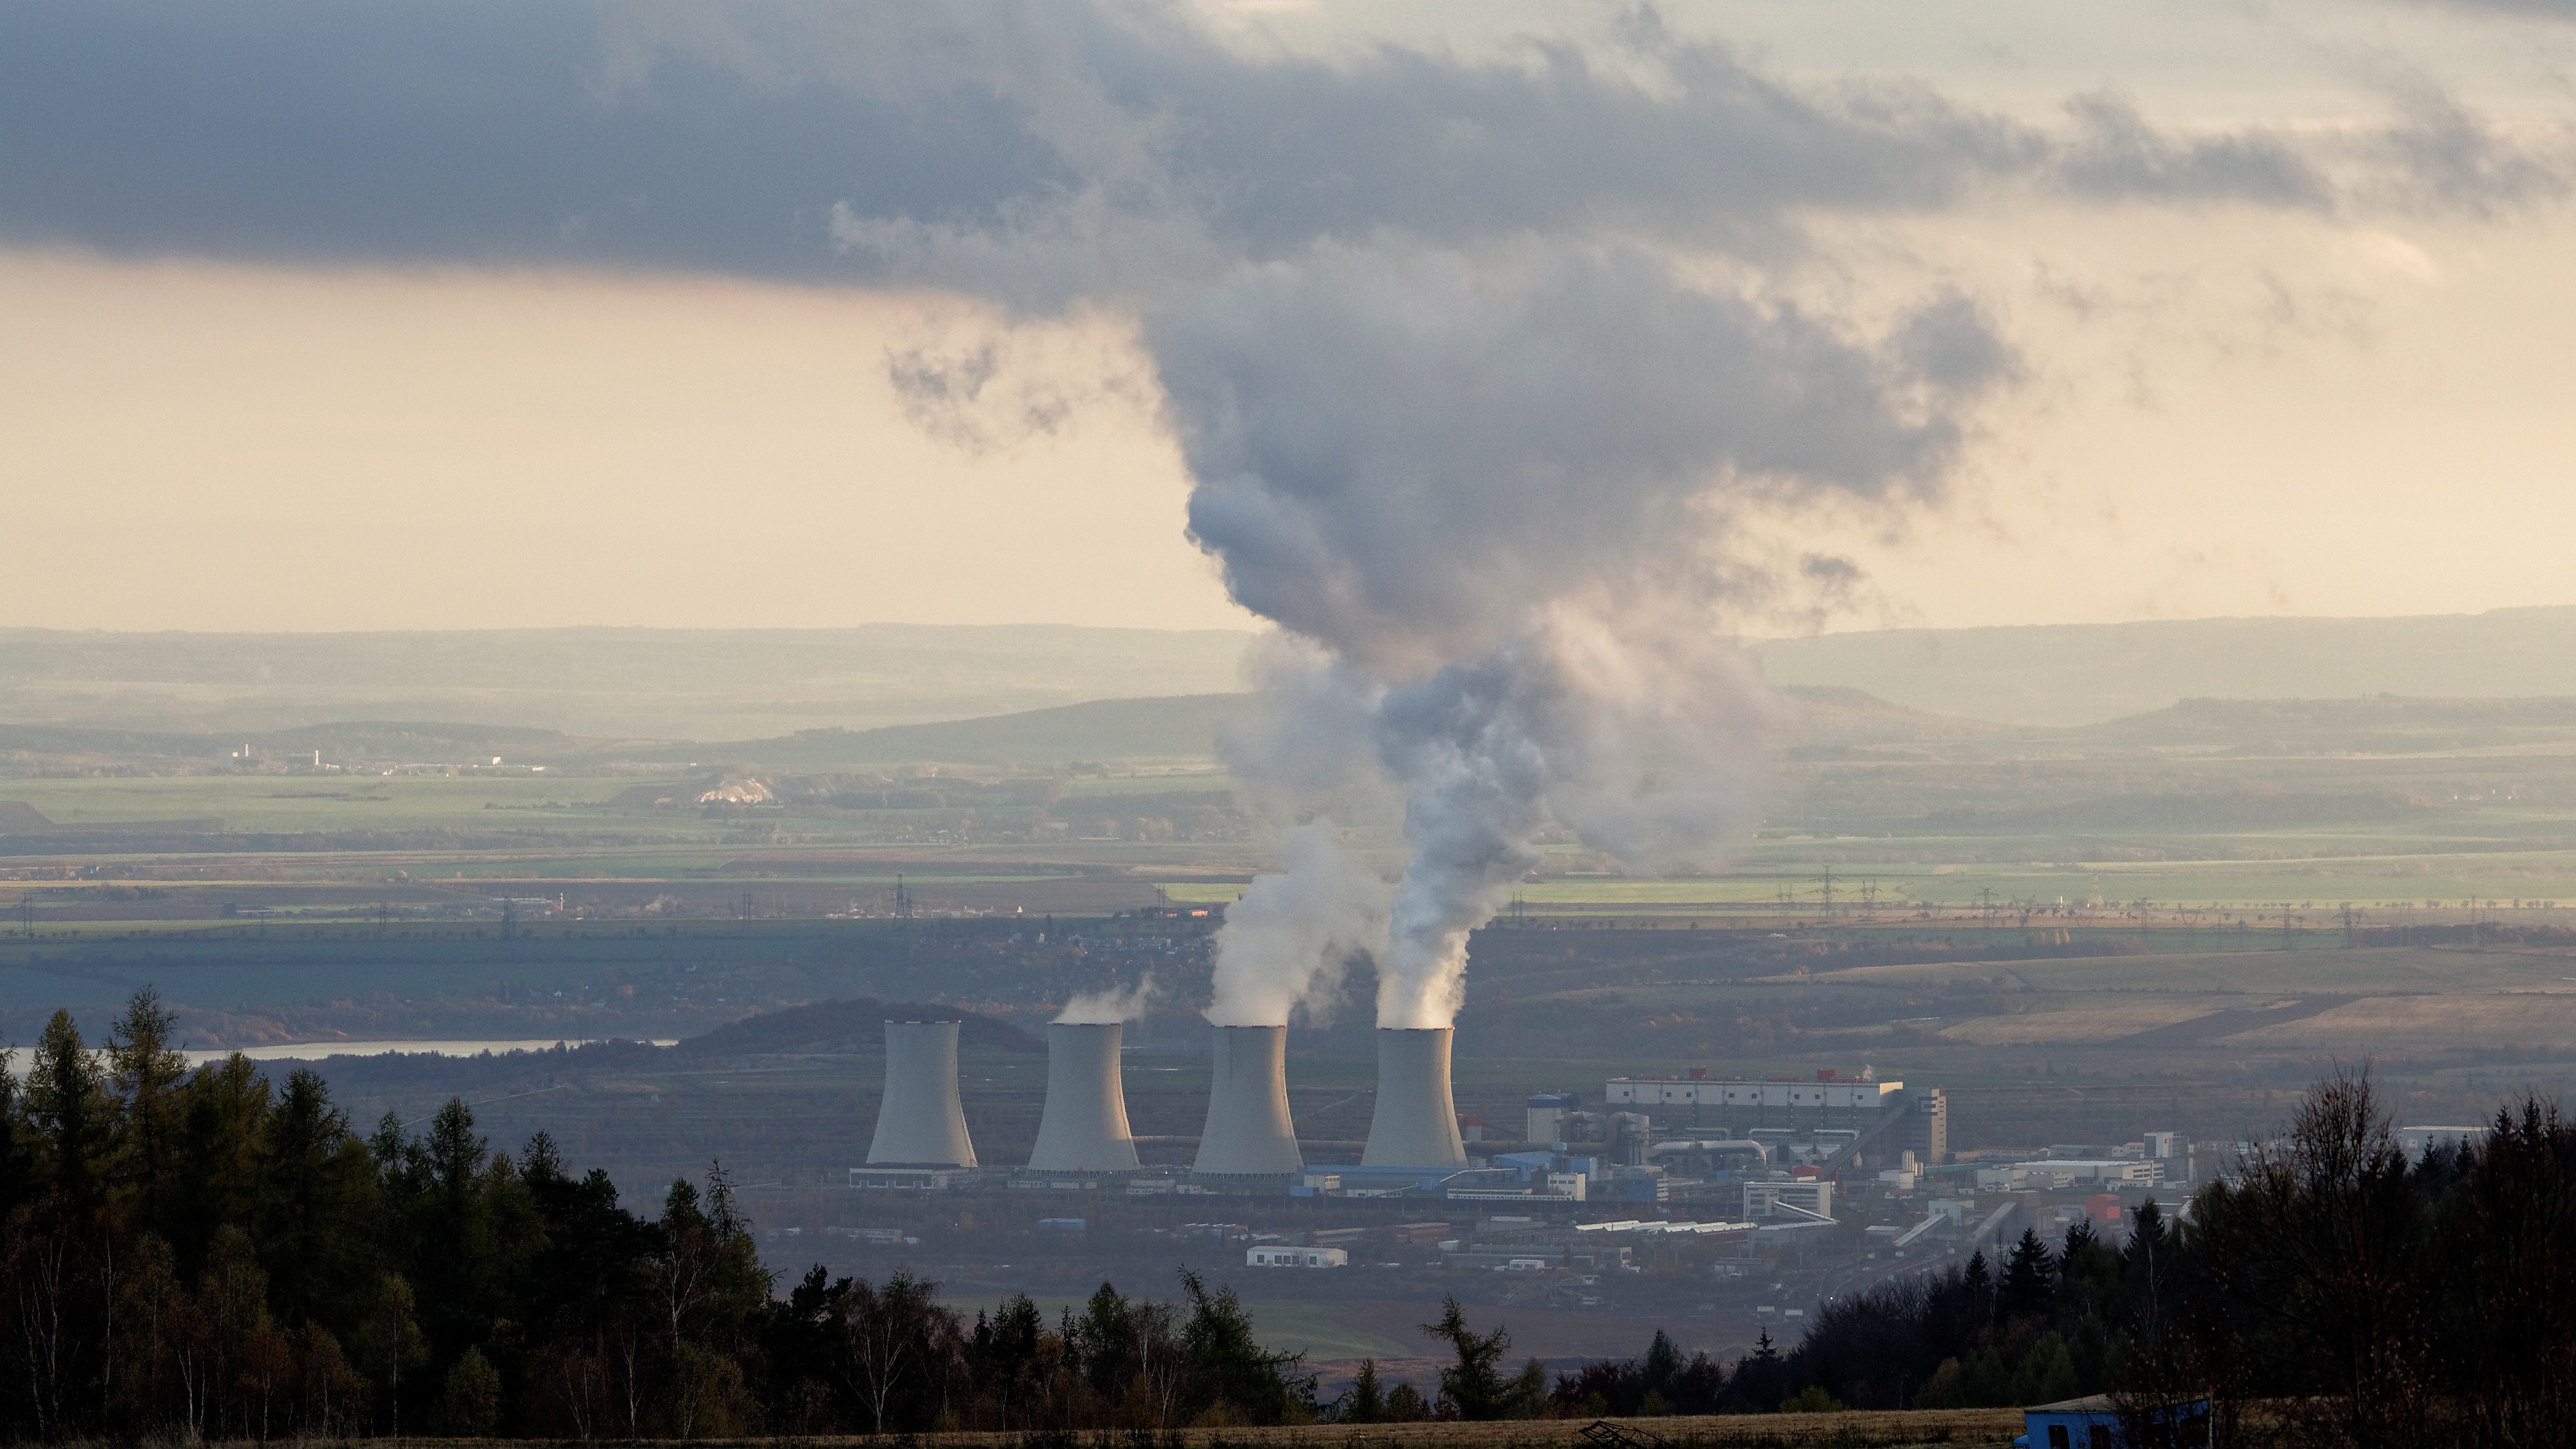 coal power plant Tusmice in northwest of Czech Republic. Photo: Tilo Arnhold/TROPOS